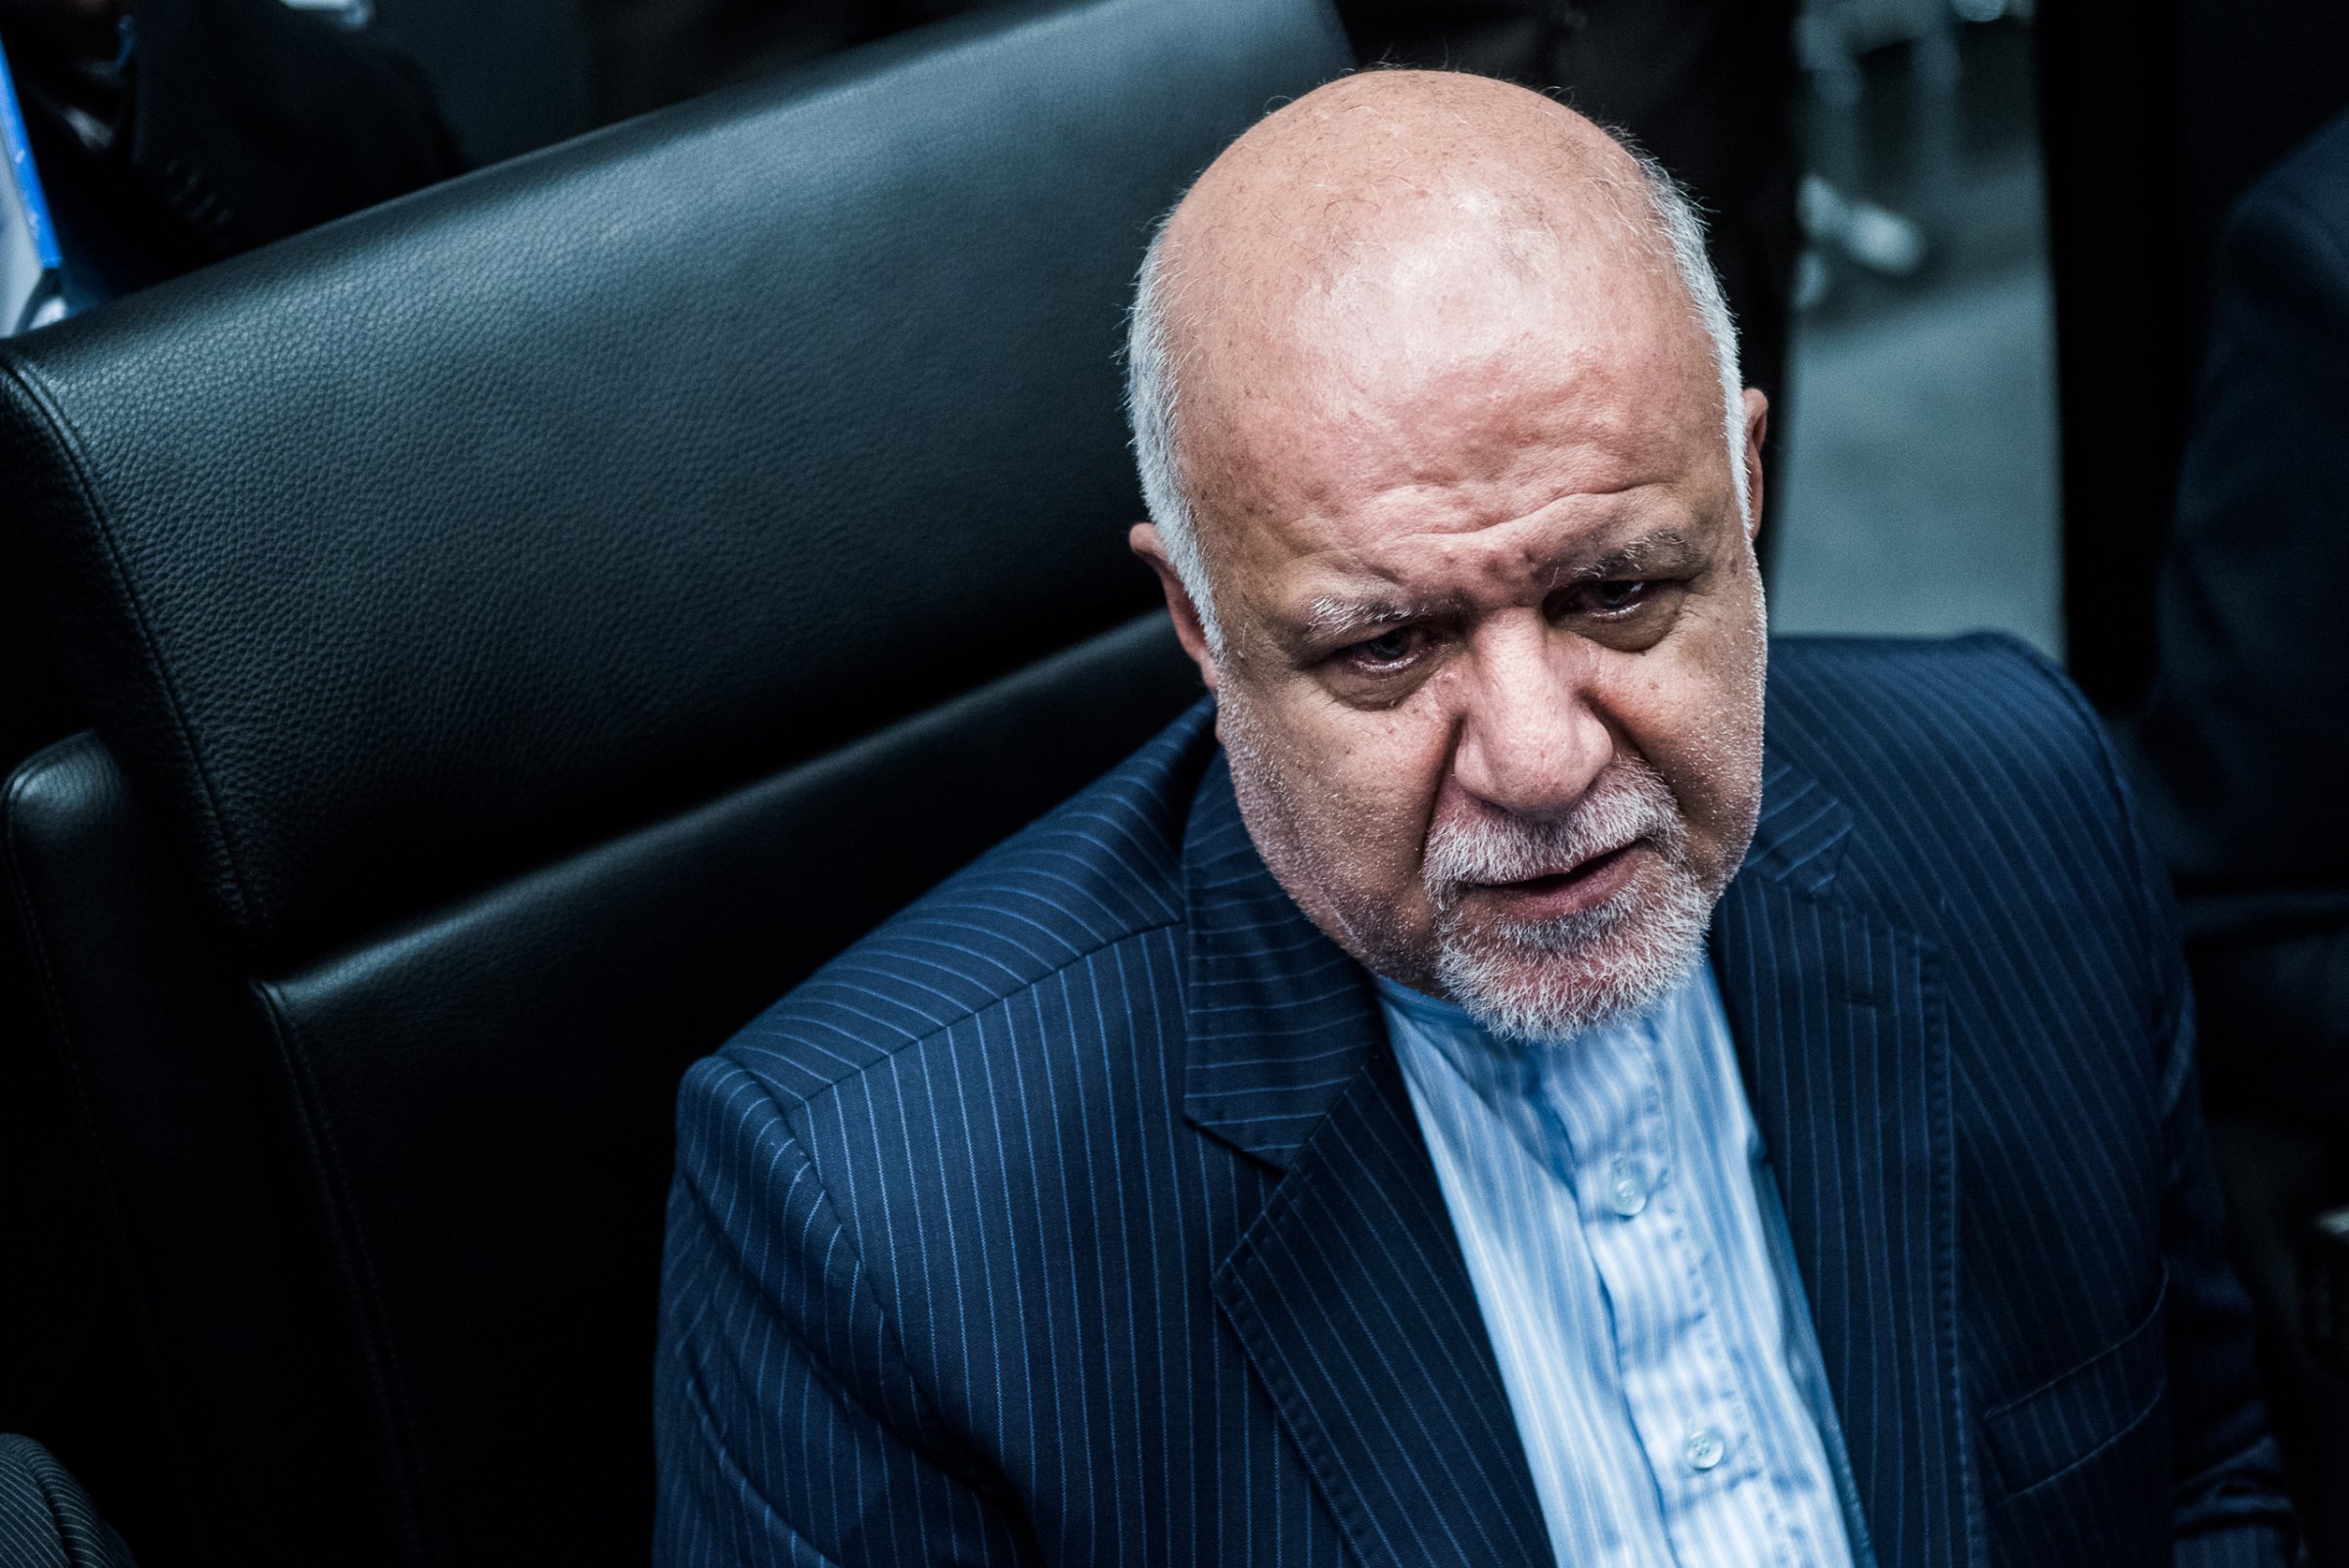 Bijan Namdar Zanganeh, Iran's petroleum minister, looks on ahead of the 169th Organization of Petroleum Exporting Countries (OPEC) meeting in Vienna, Austria, on June 2, 2016.